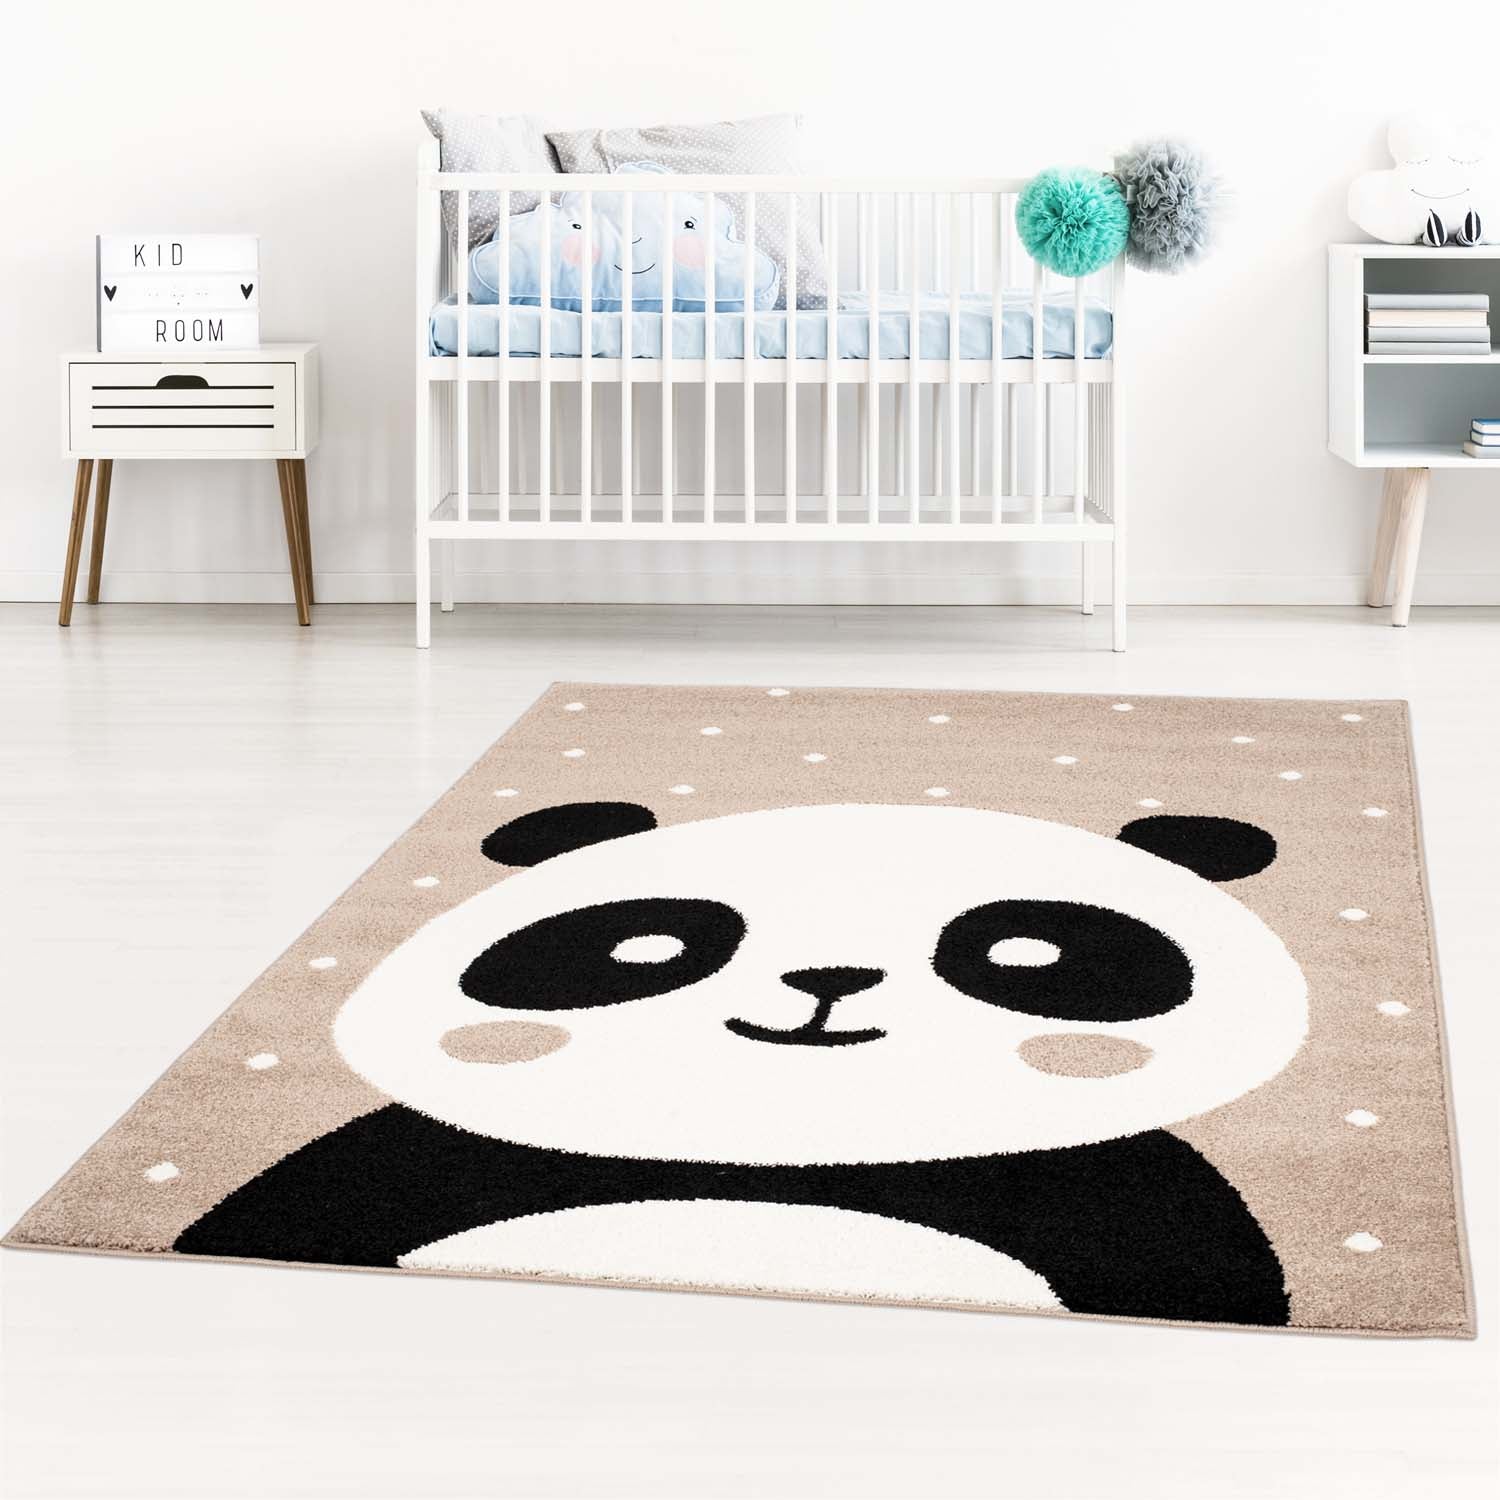 Kindertapijt Omid Pandaoogjes Beige Vloerkleed - Omid Carpets